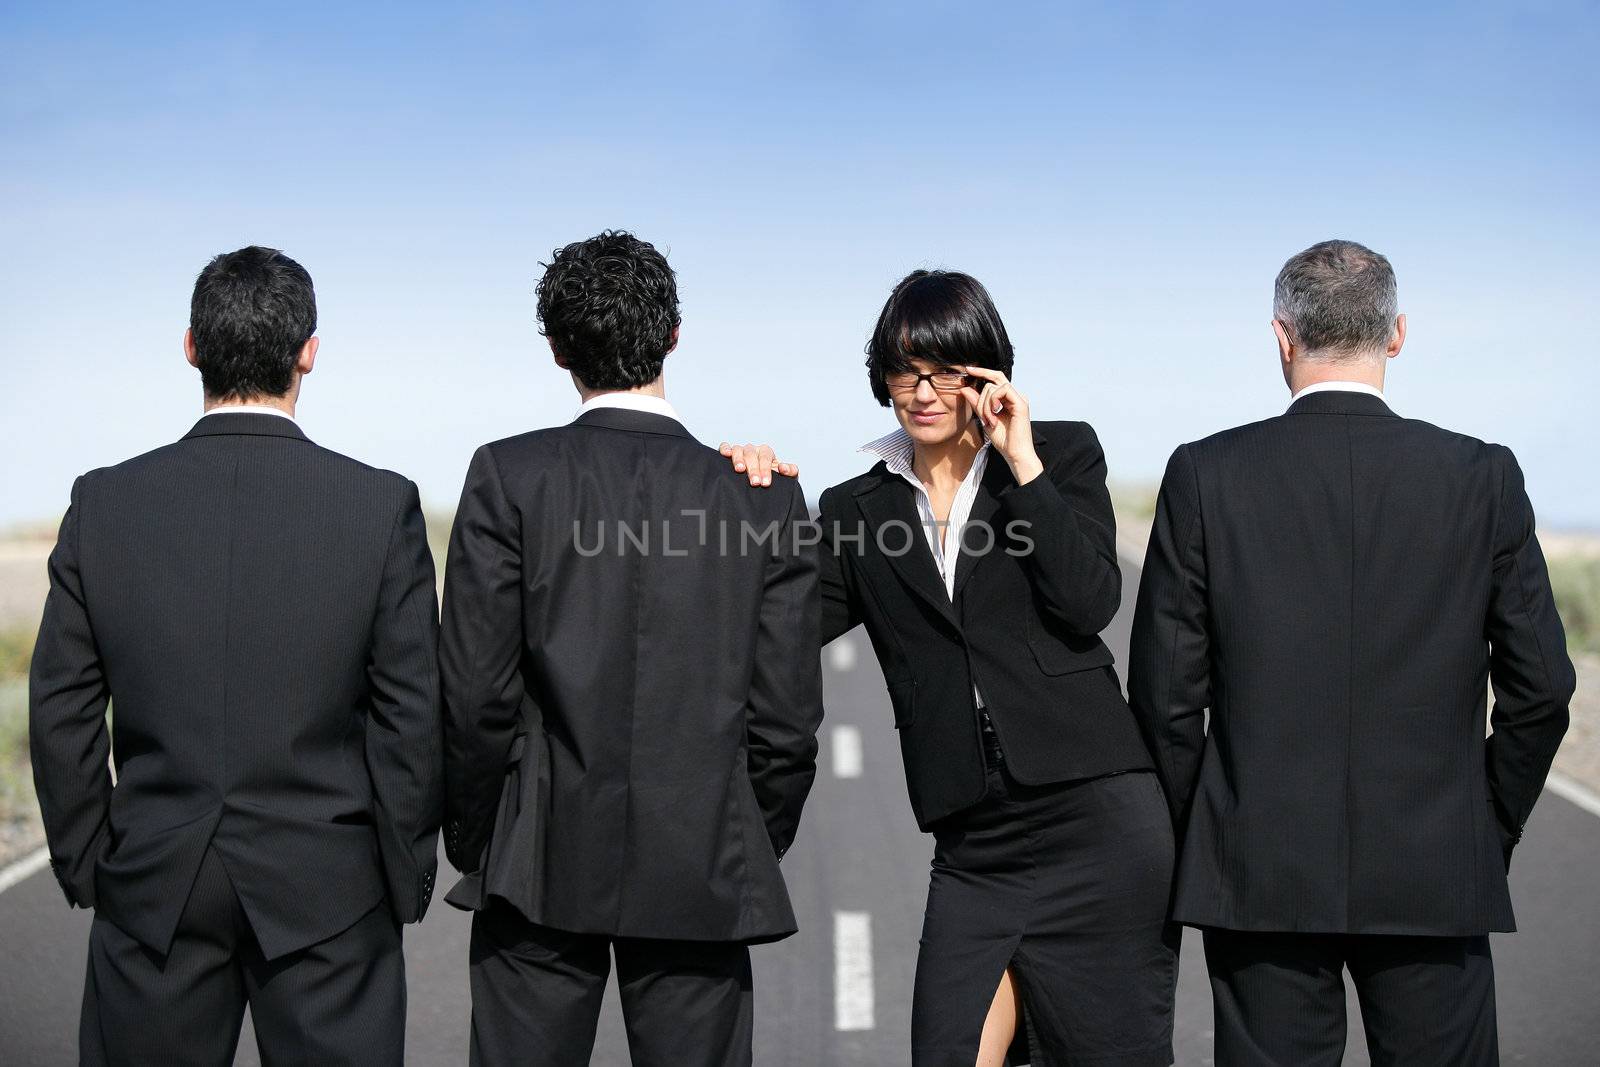 Woman in suit standing near men in suit by phovoir